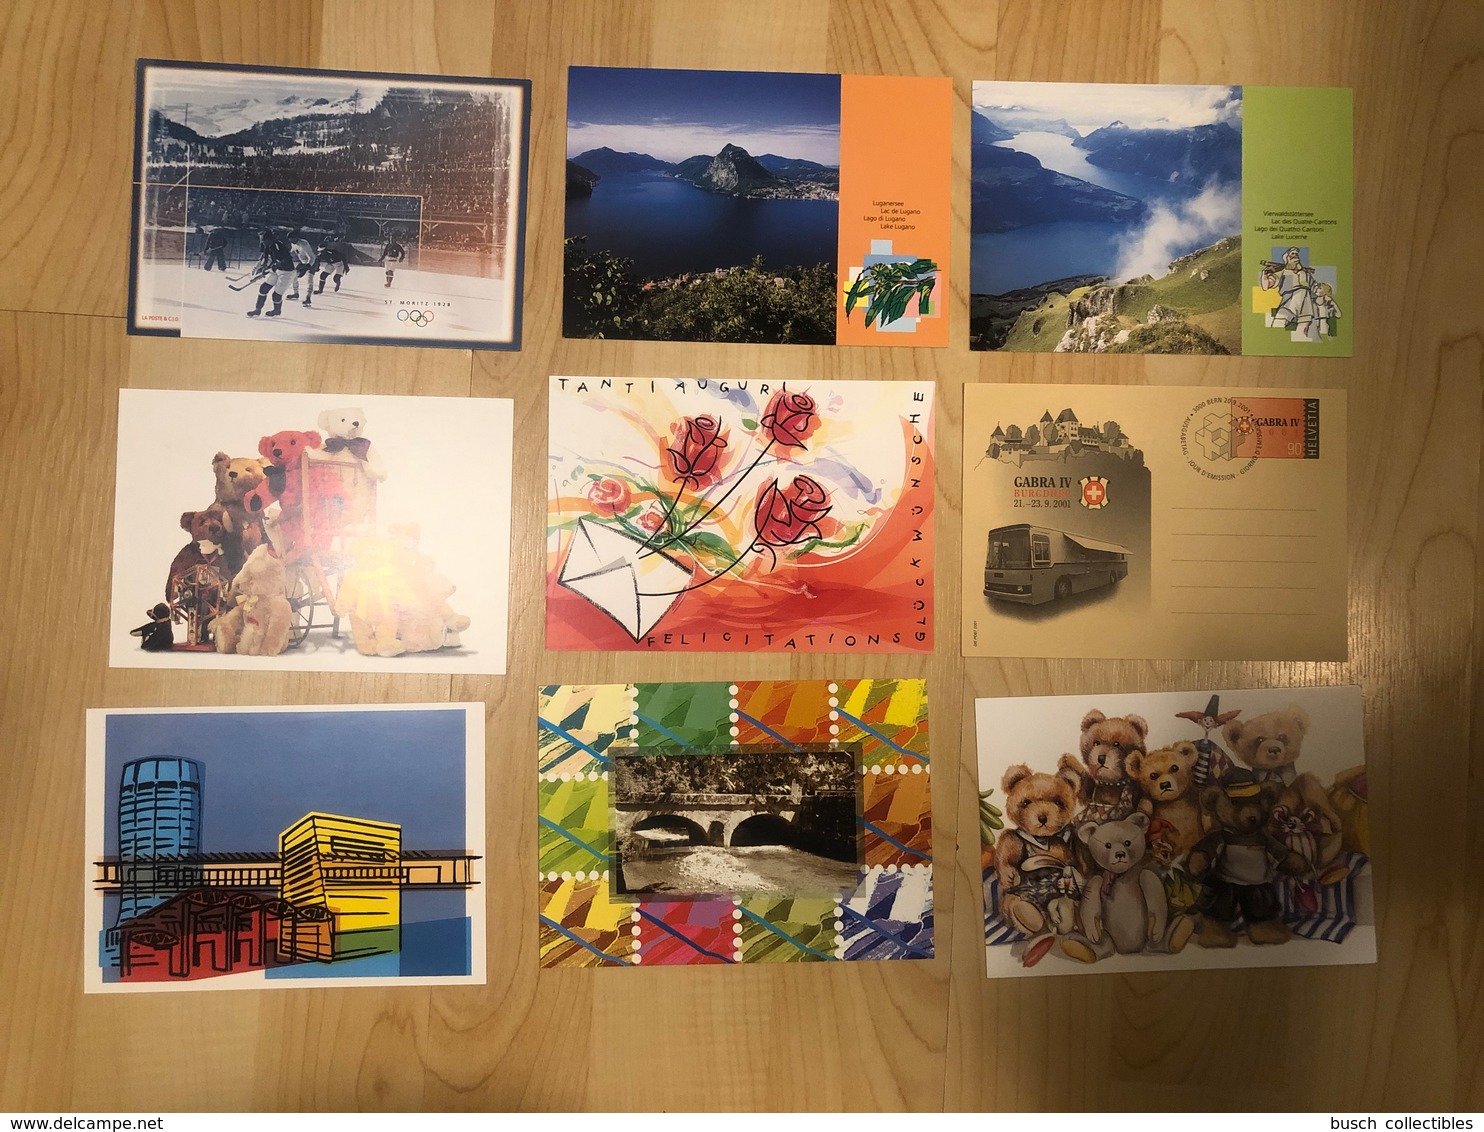 Suisse Schweiz Switzerland 91 entiers postaux Ganzsachen Stationneries Tintin Olympic Games Space Journée du timbre